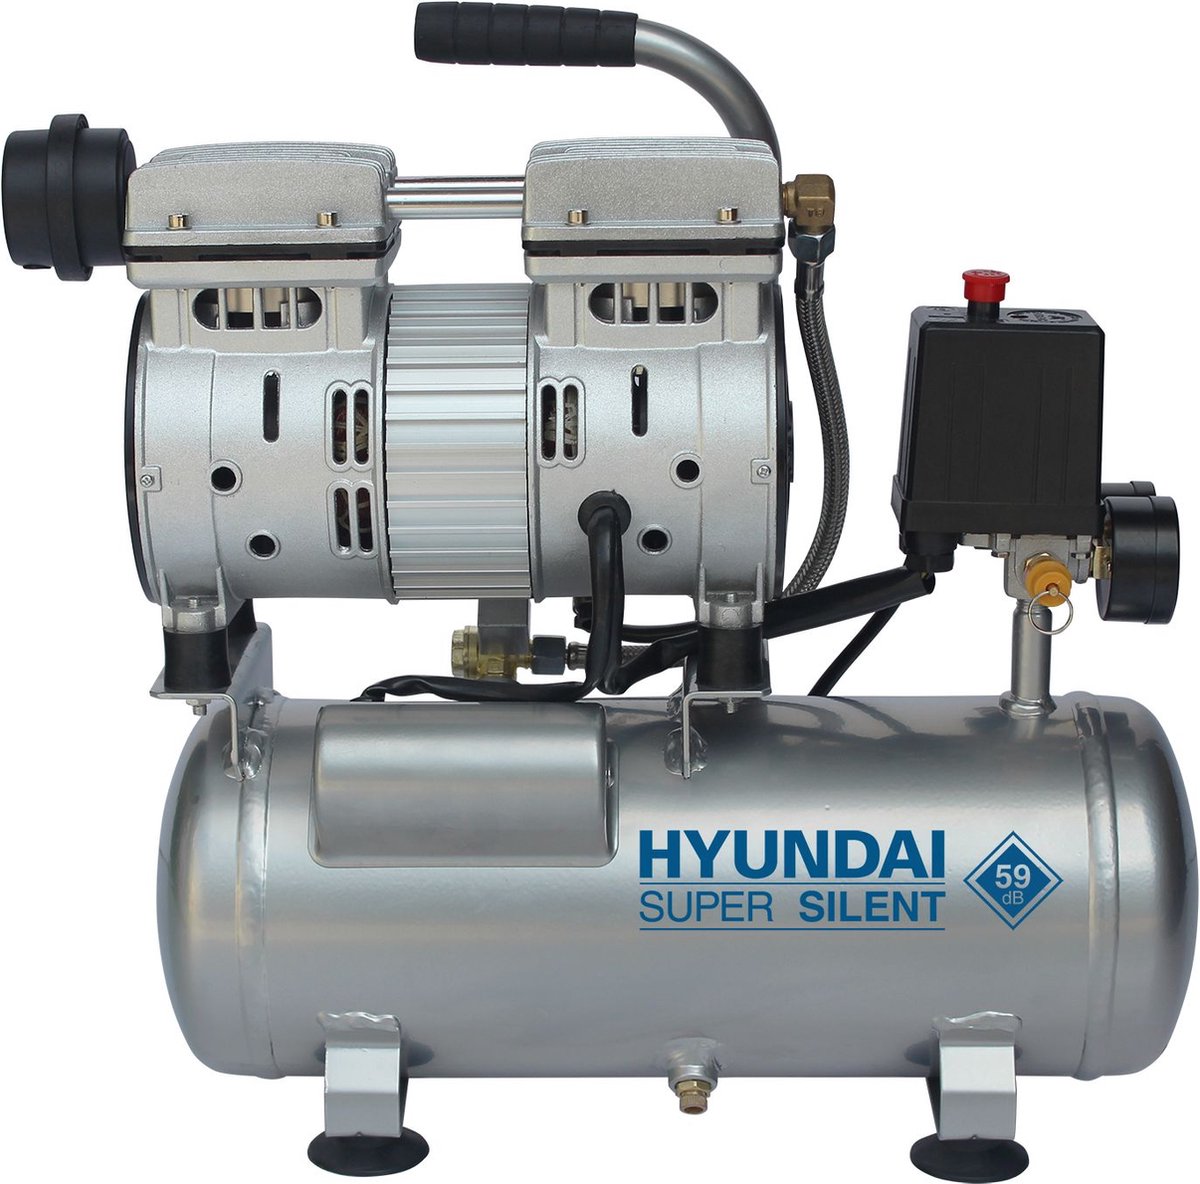 Hyundai stille 59dB compressor 6 liter - 8 BAR olievrij Low Noise - 'Super  Silent' | bol.com